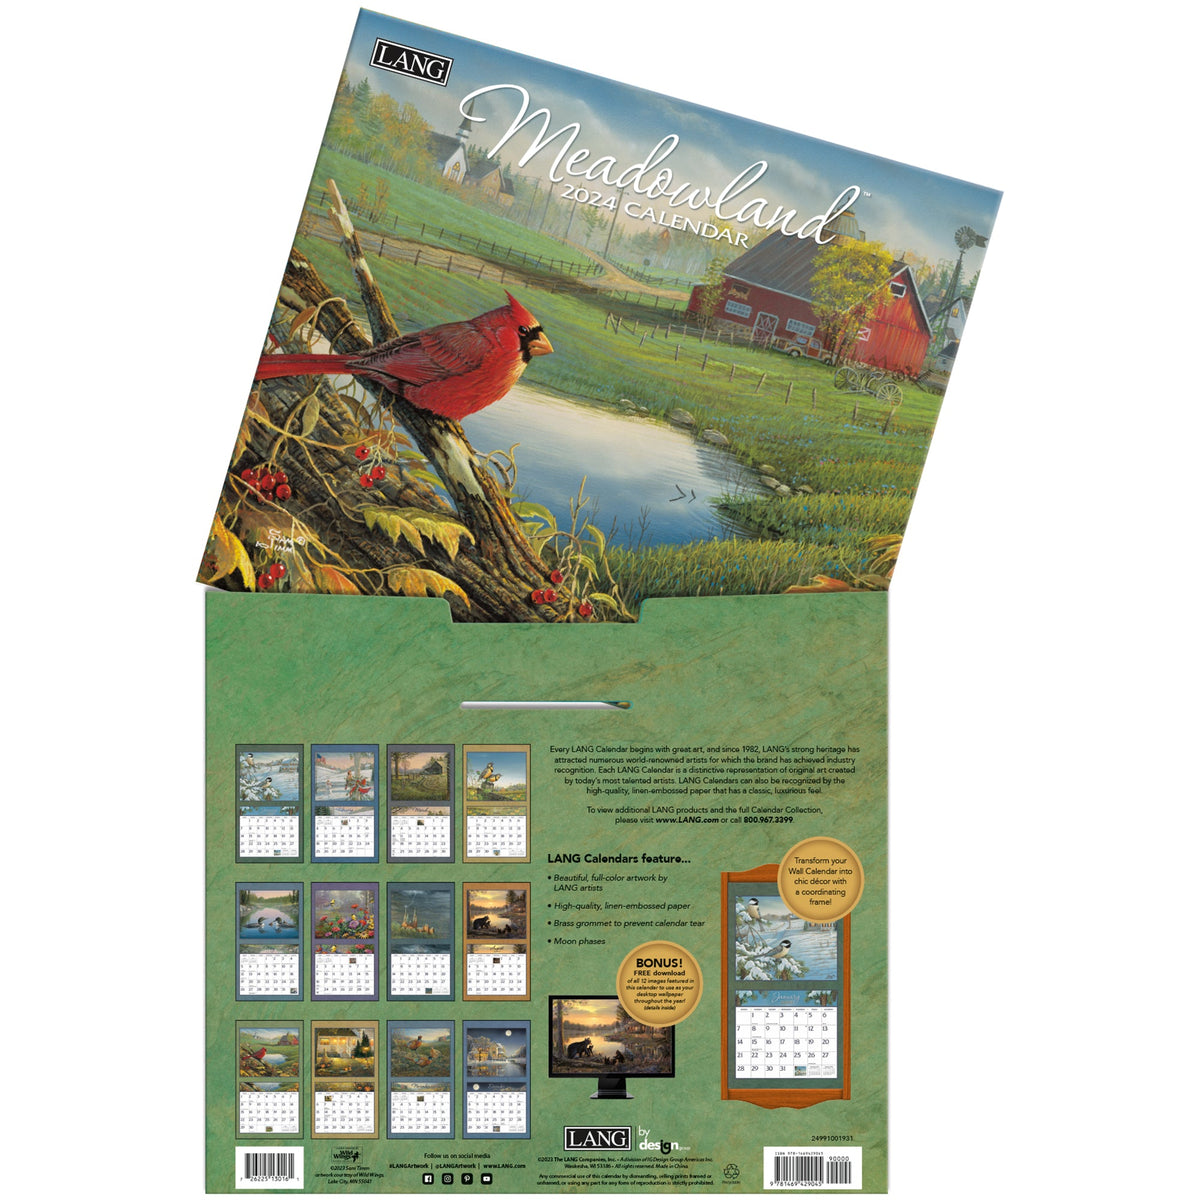 2024 Meadowland - Calendar